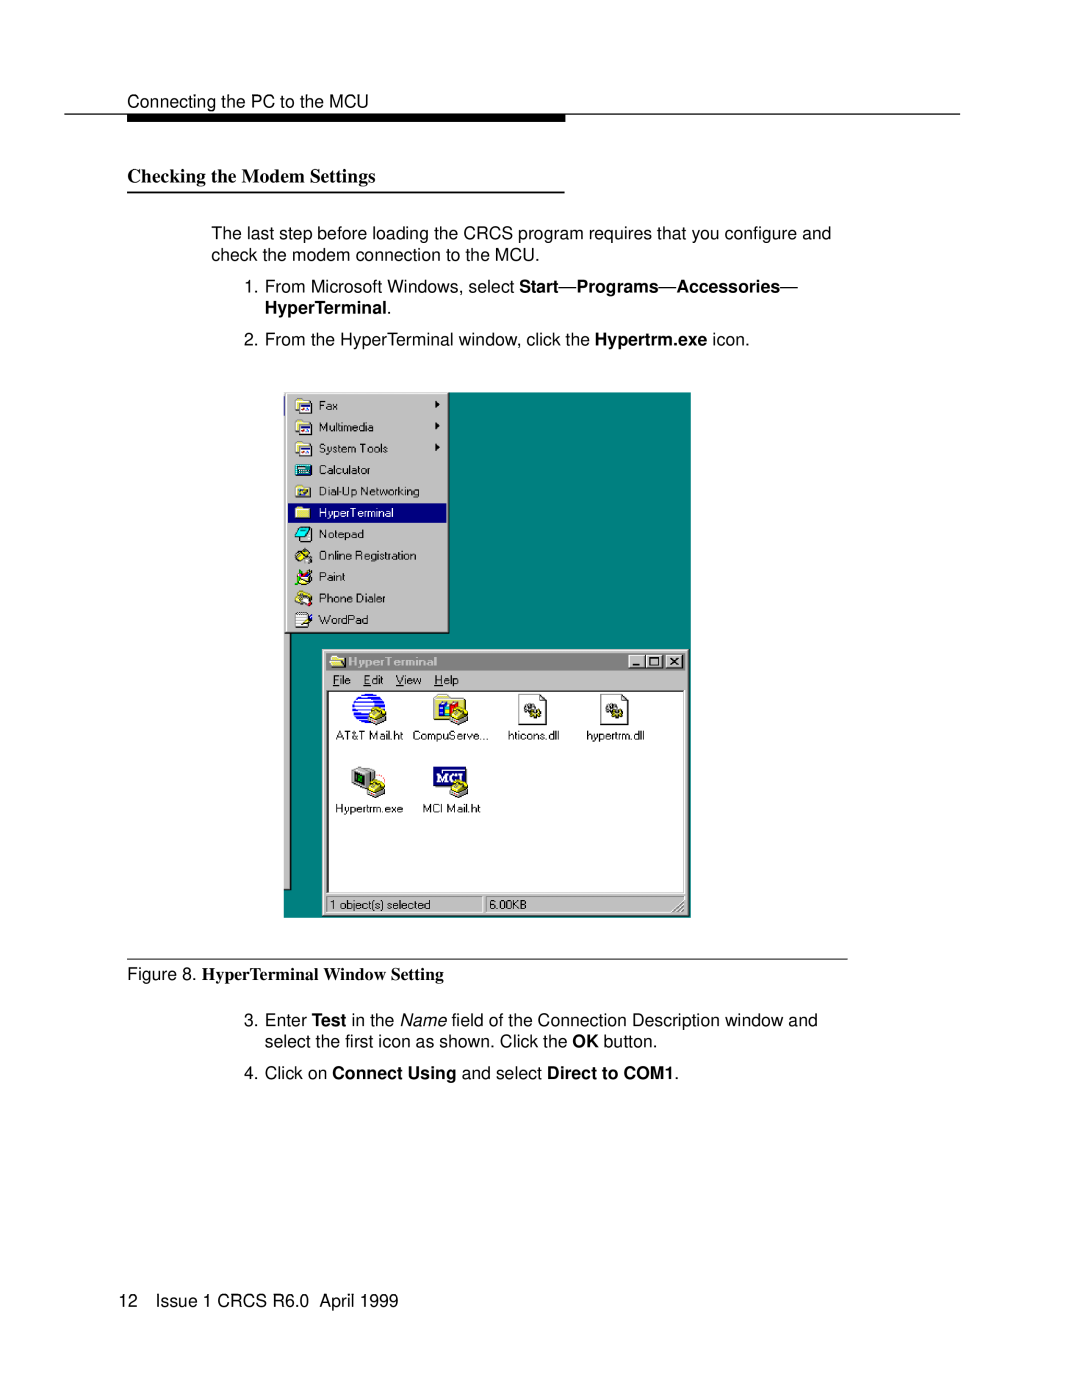 Lucent Technologies 6 manual Checking the Modem Settings, HyperTerminal Window Setting 